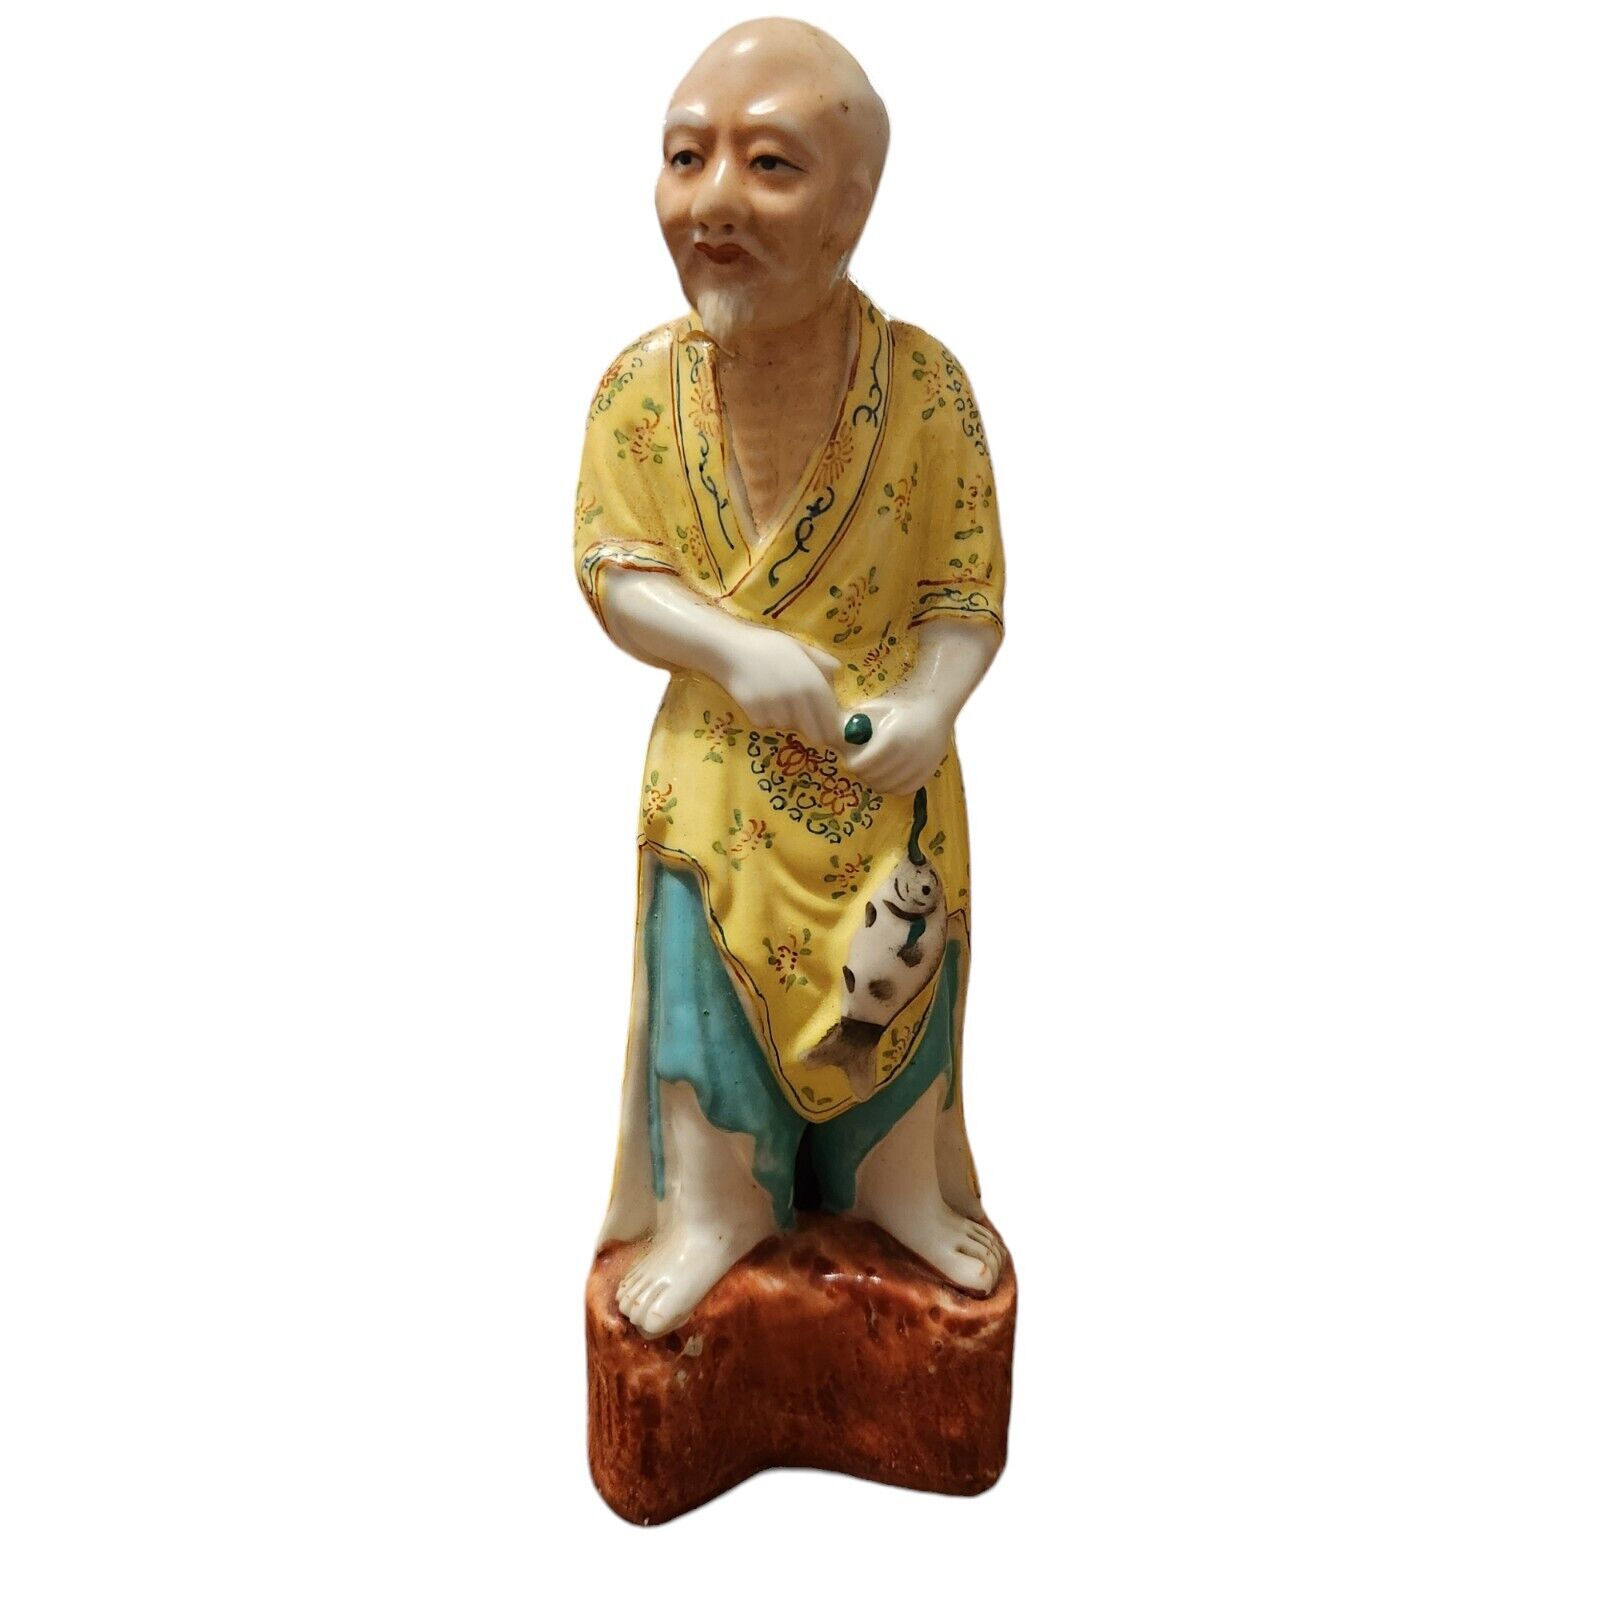 Vintage Asian Chinese Elder Man Holding Fish 9.5” Porcelain Figurine Statue